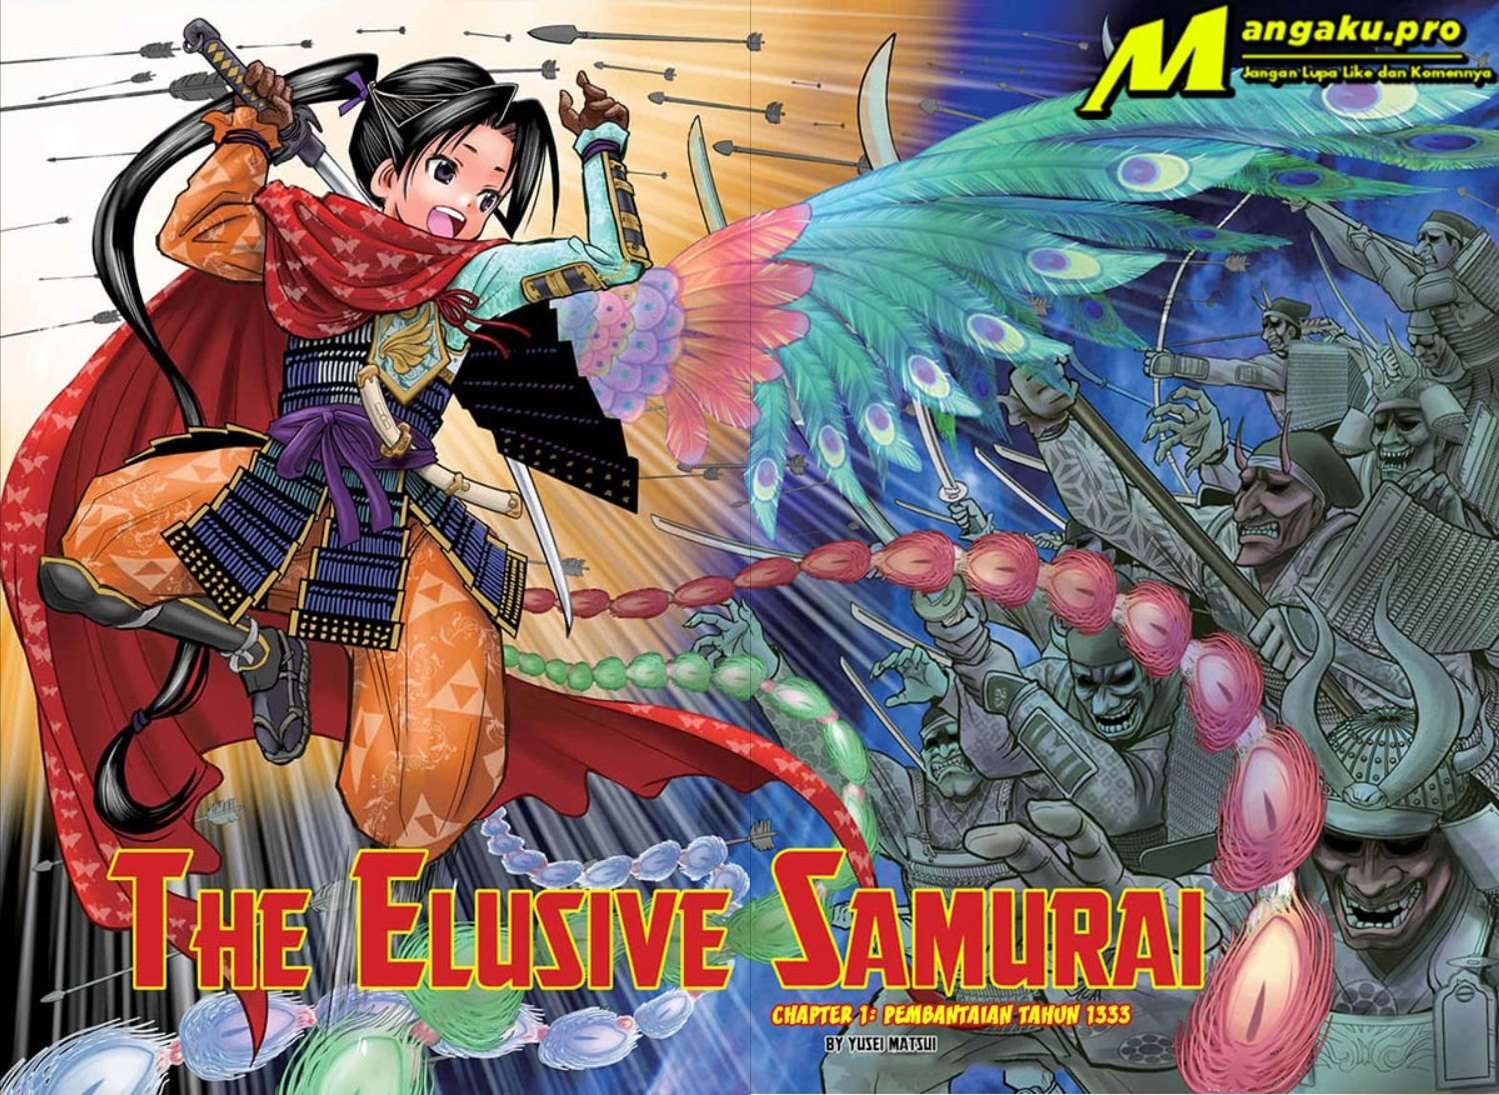 The Elusive Samurai Chapter 1.1